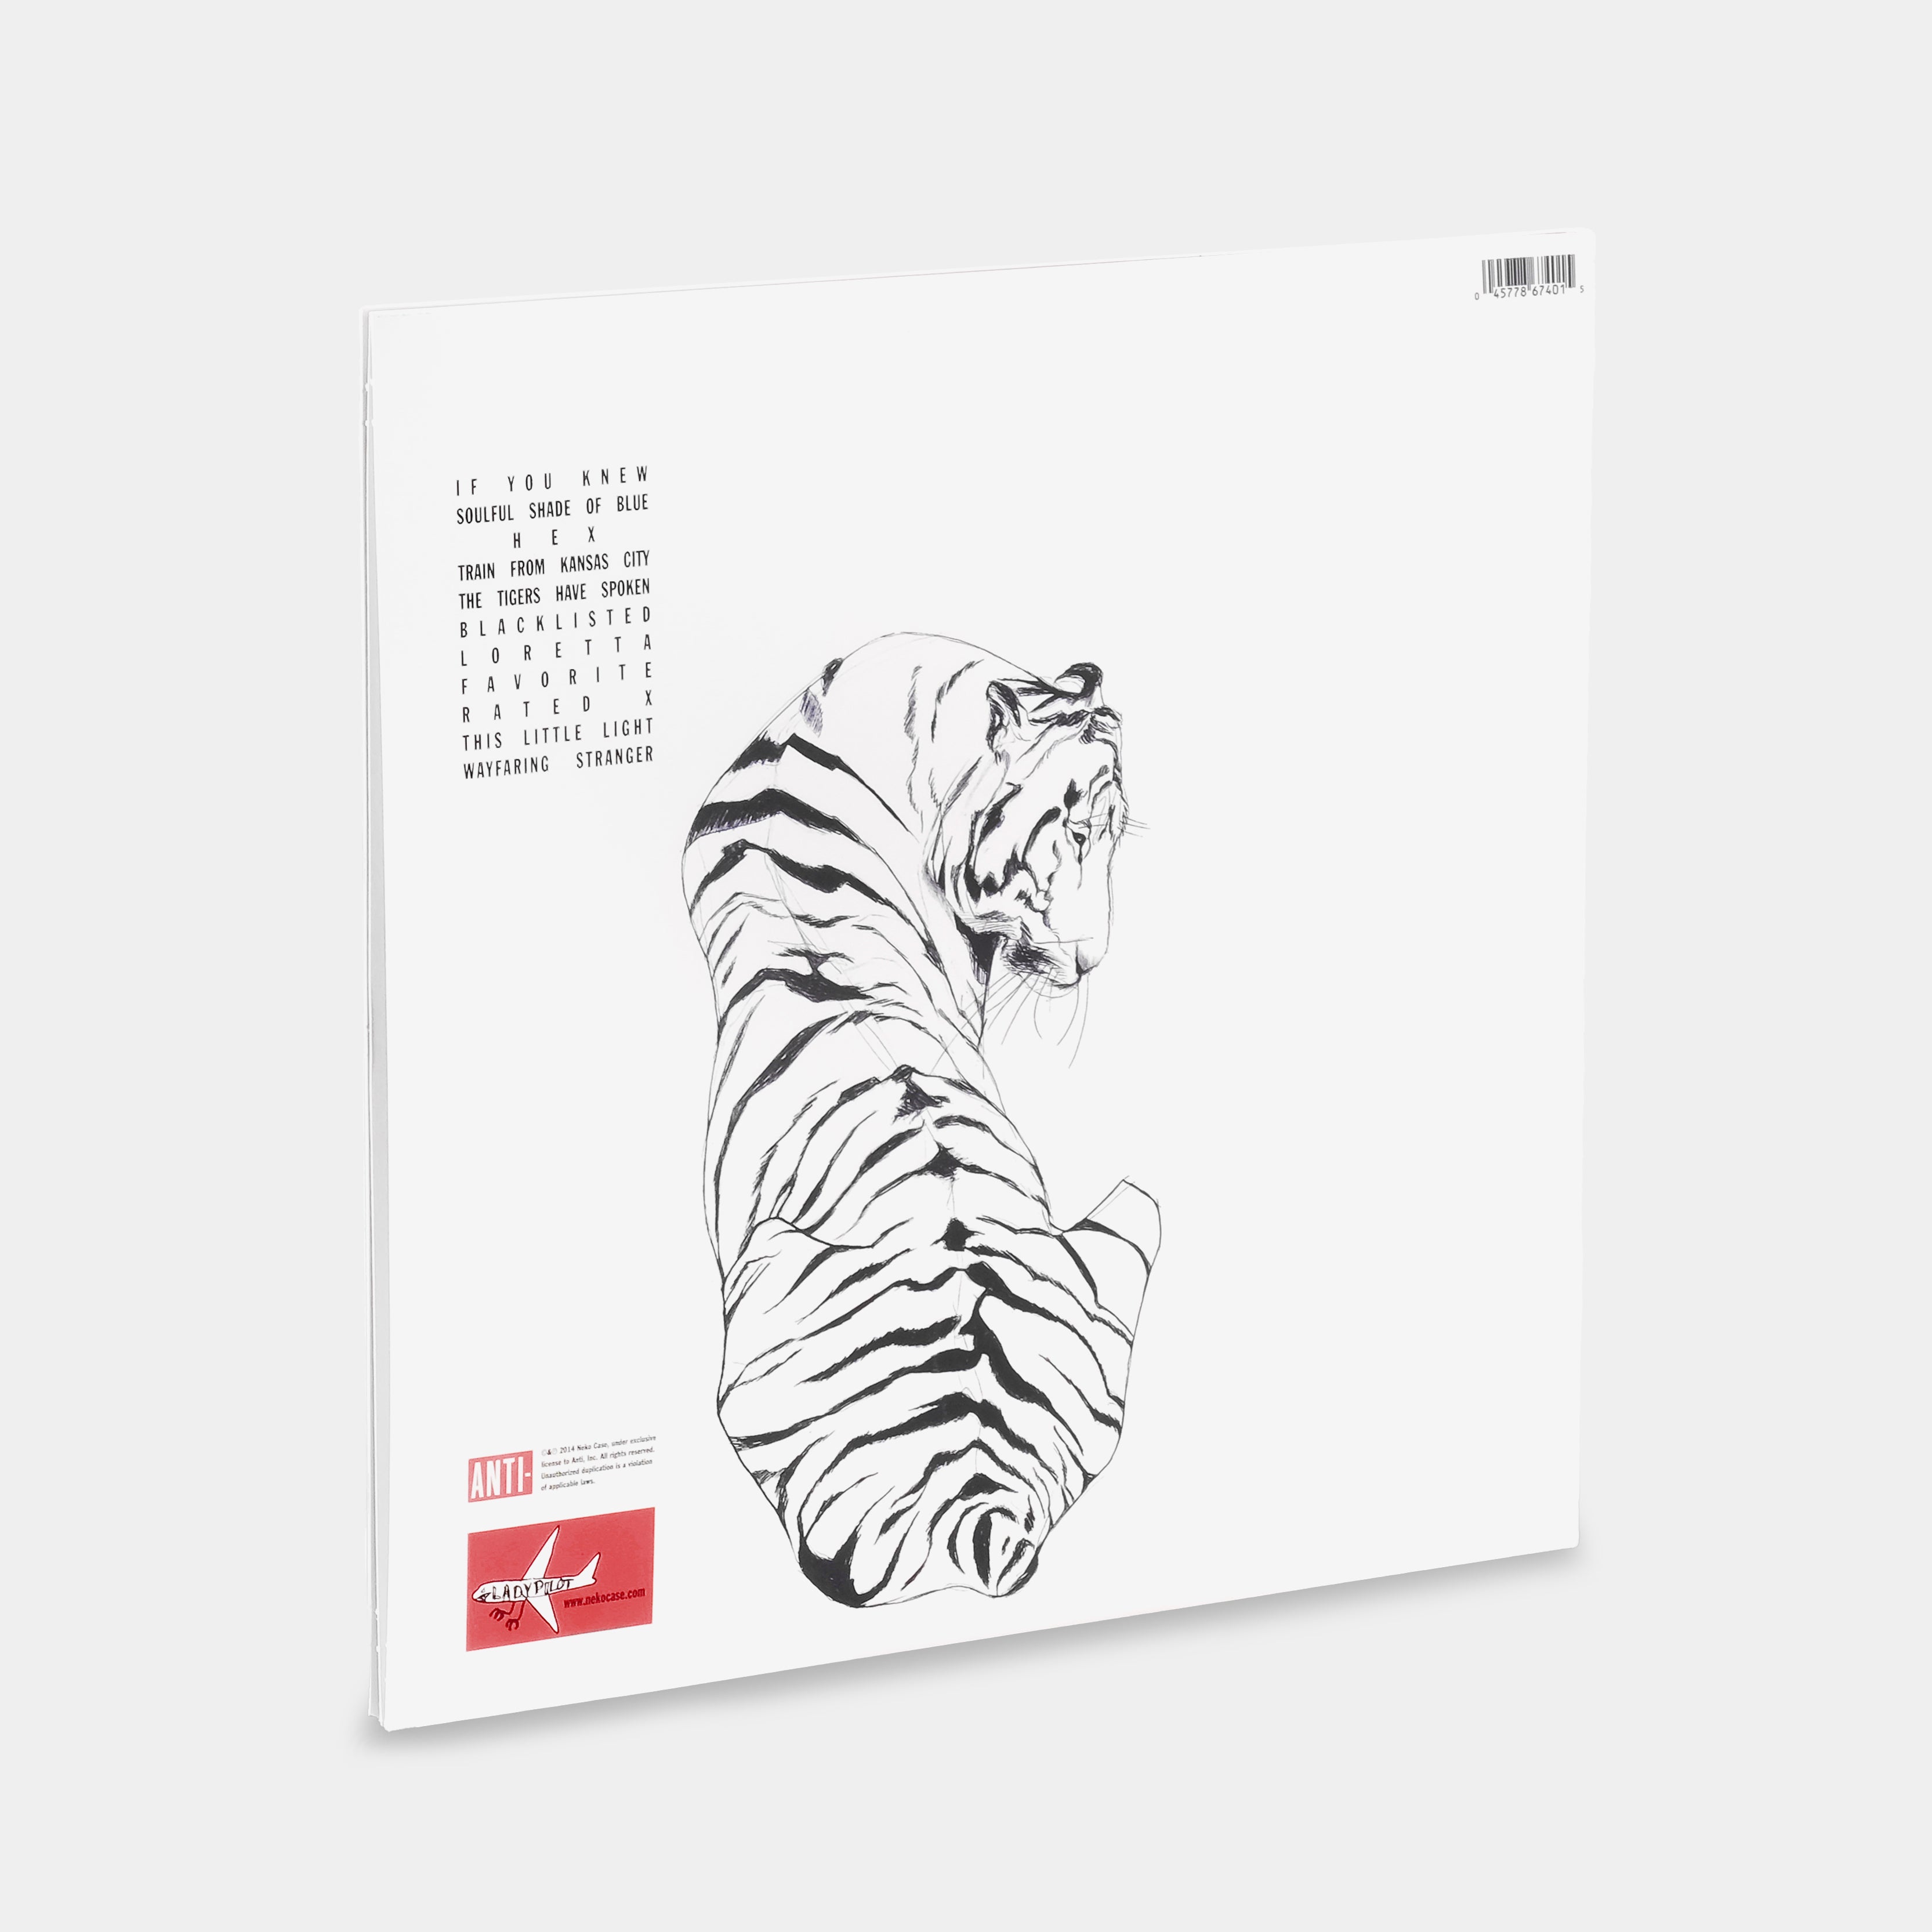 Neko Case - The Tigers Have Spoken LP Vinyl Record